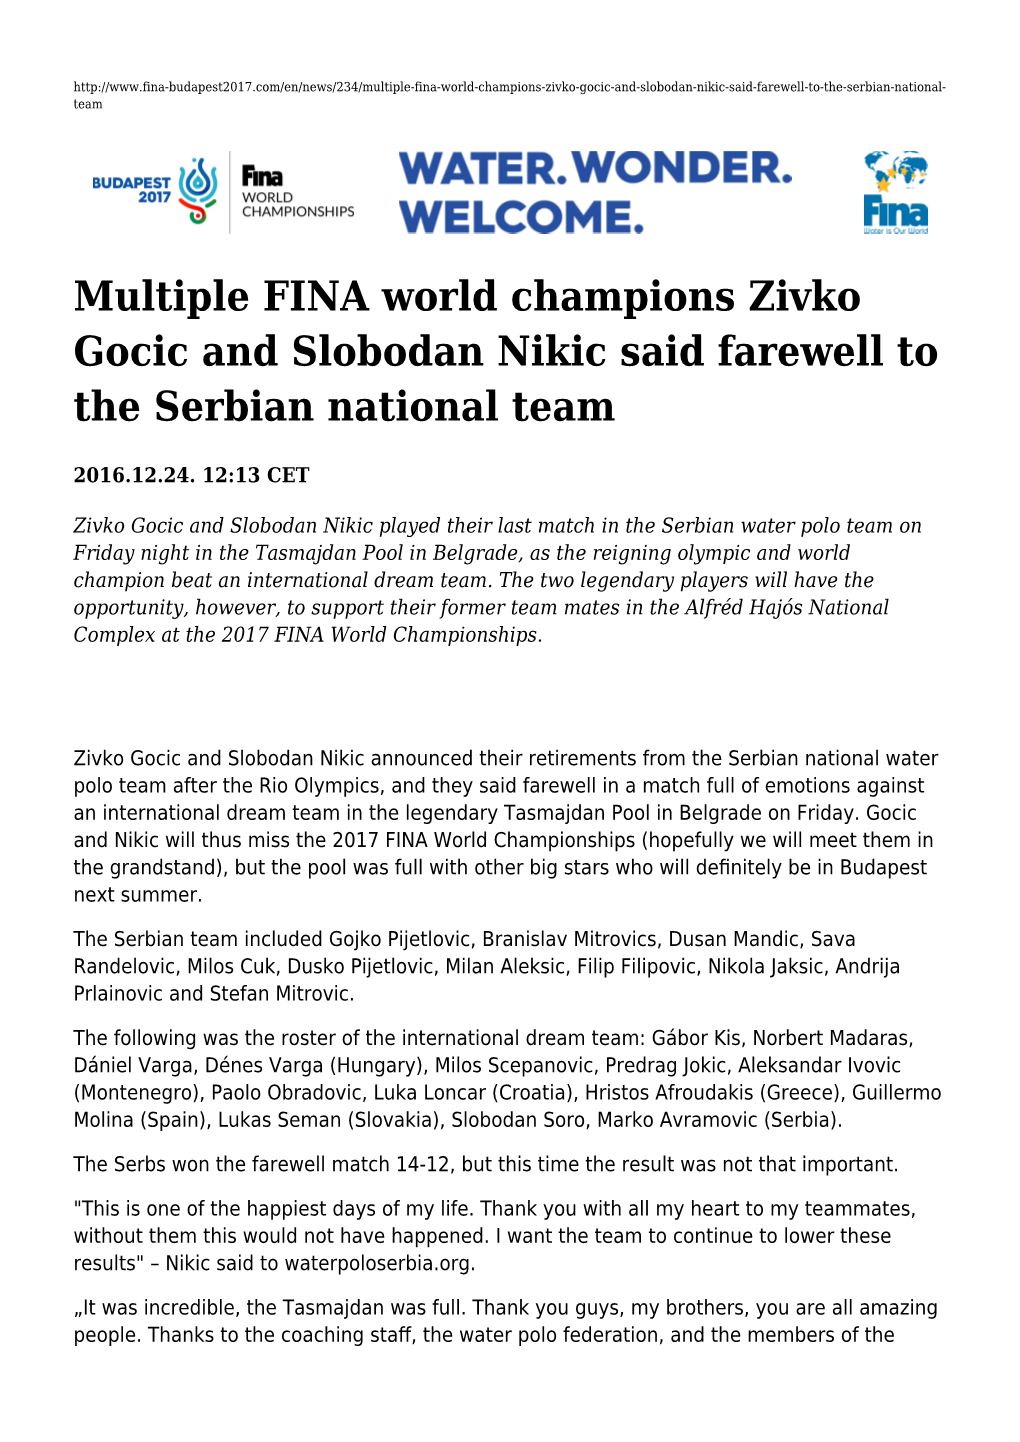 Multiple FINA World Champions Zivko Gocic and Slobodan Nikic Said Farewell to the Serbian National Team